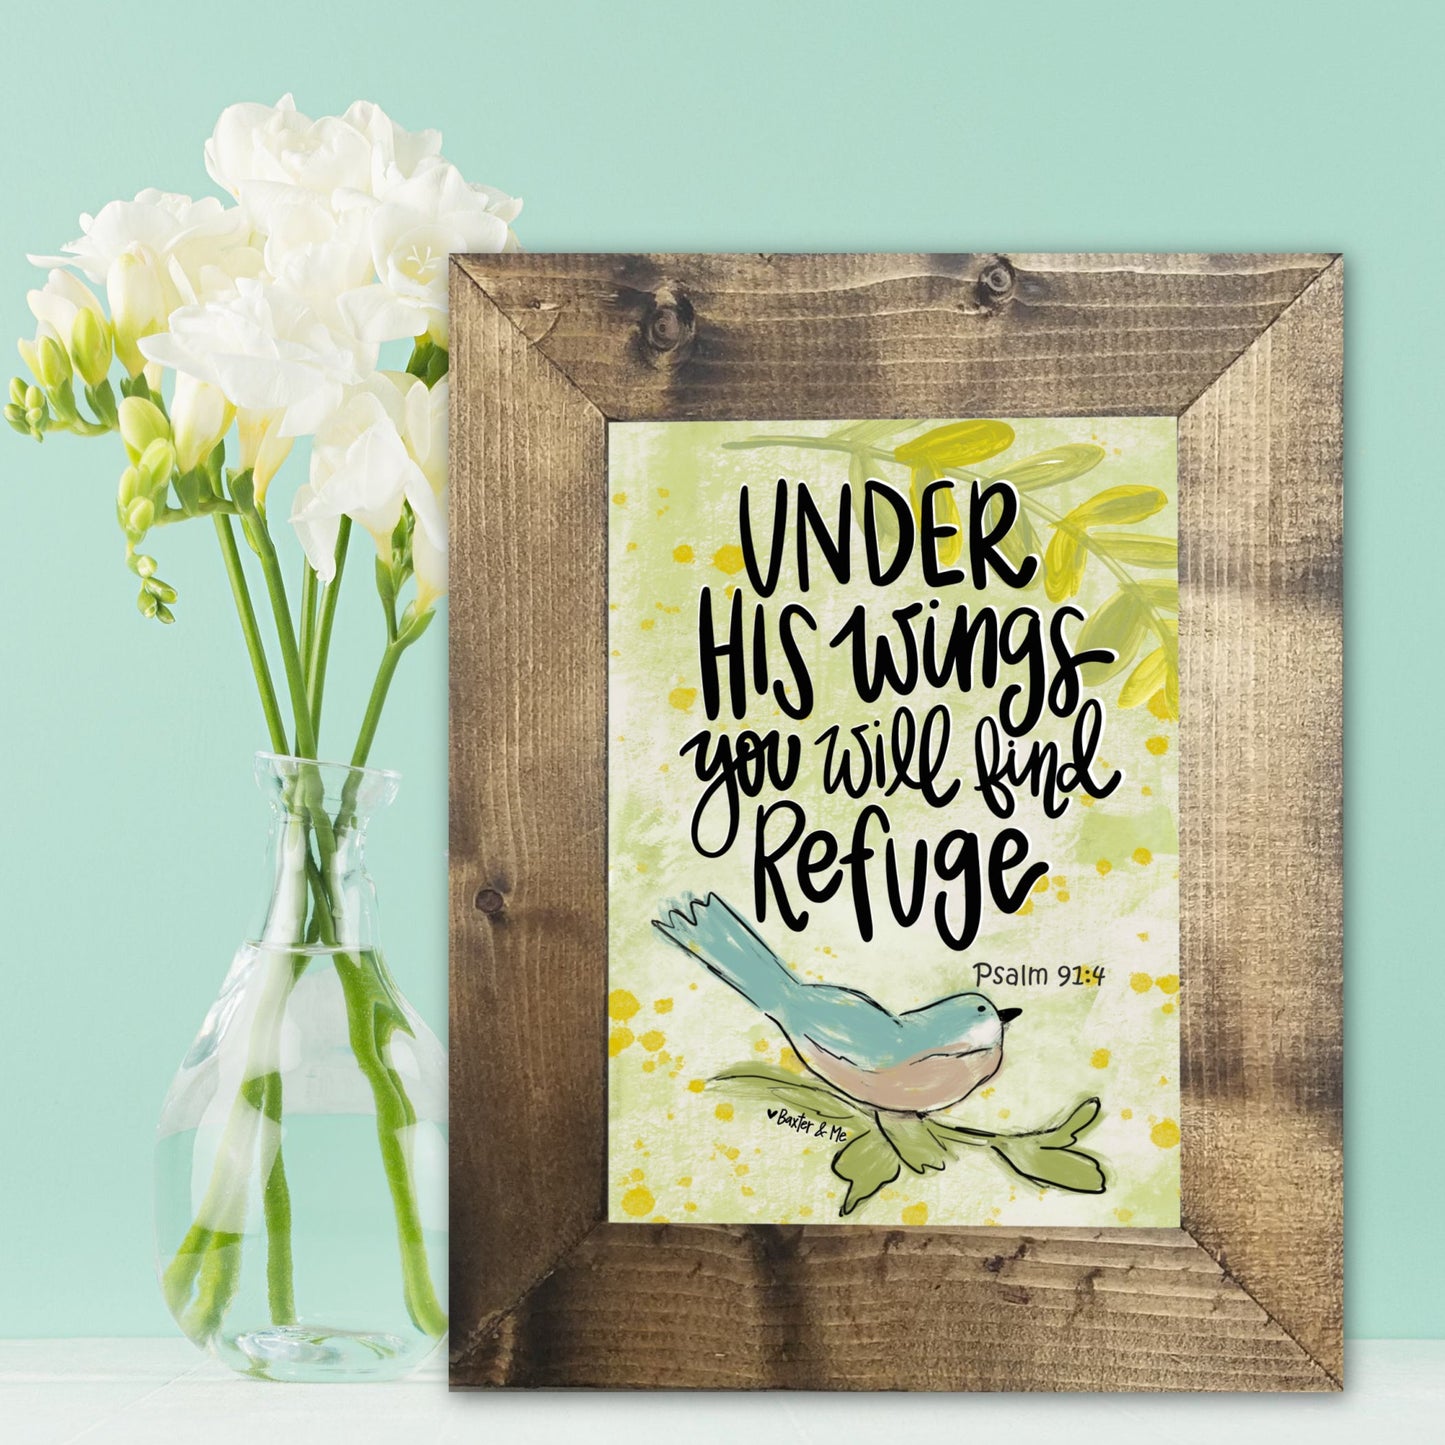 Under His Wings You will Find Refuge Framed Art